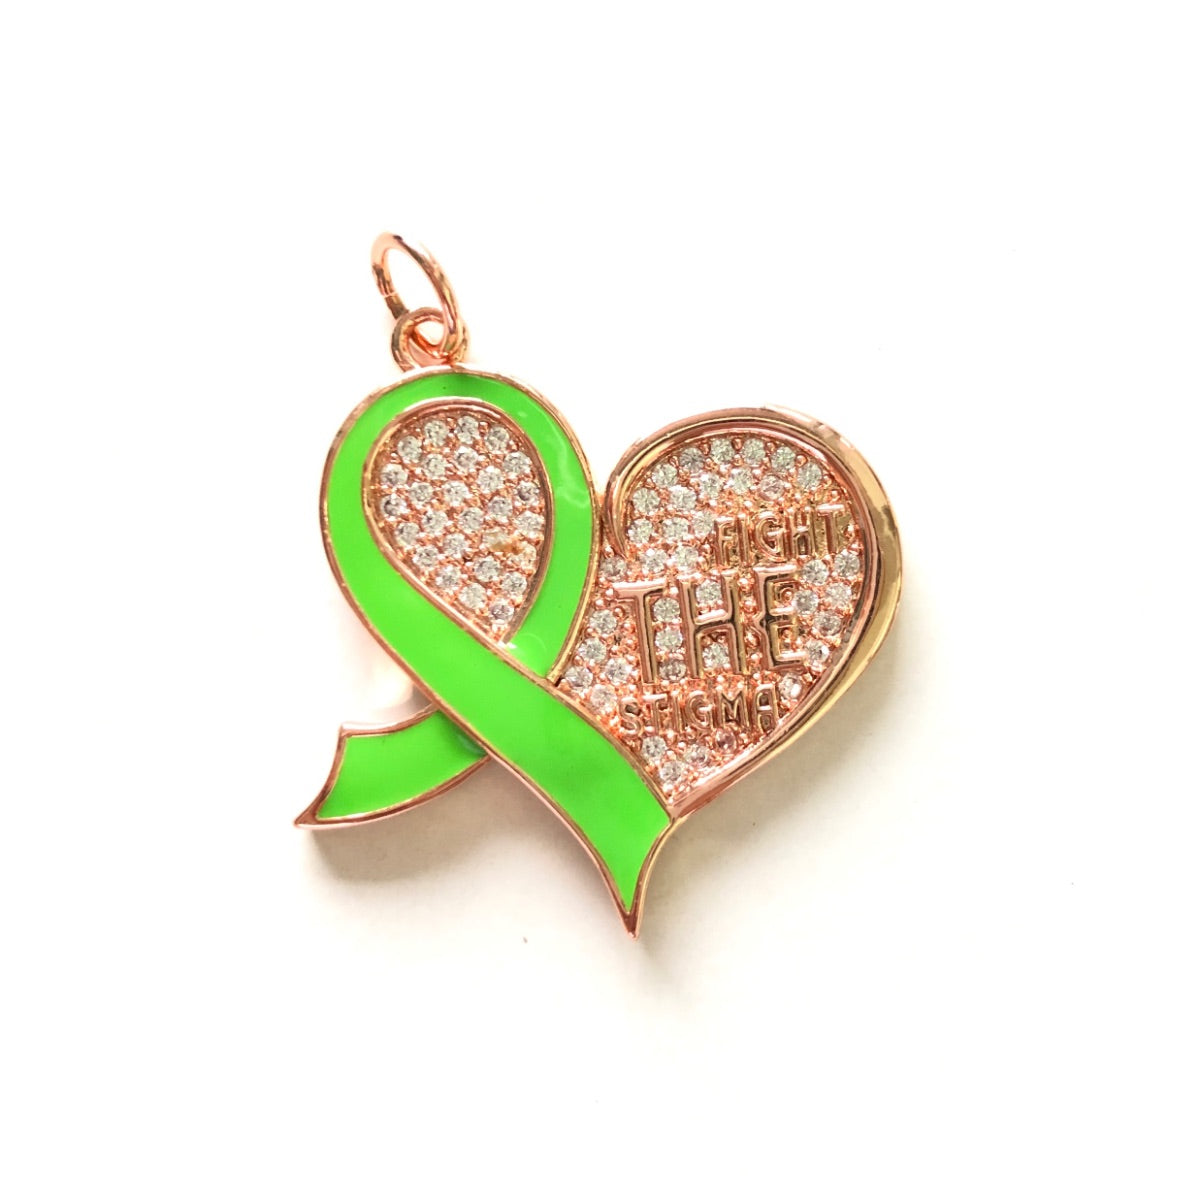 10pcs/lot CZ Pave Green Ribbon Fight The Stigma Mental Health Awareness Heart Charms Rose Gold CZ Paved Charms Hearts New Charms Arrivals Charms Beads Beyond